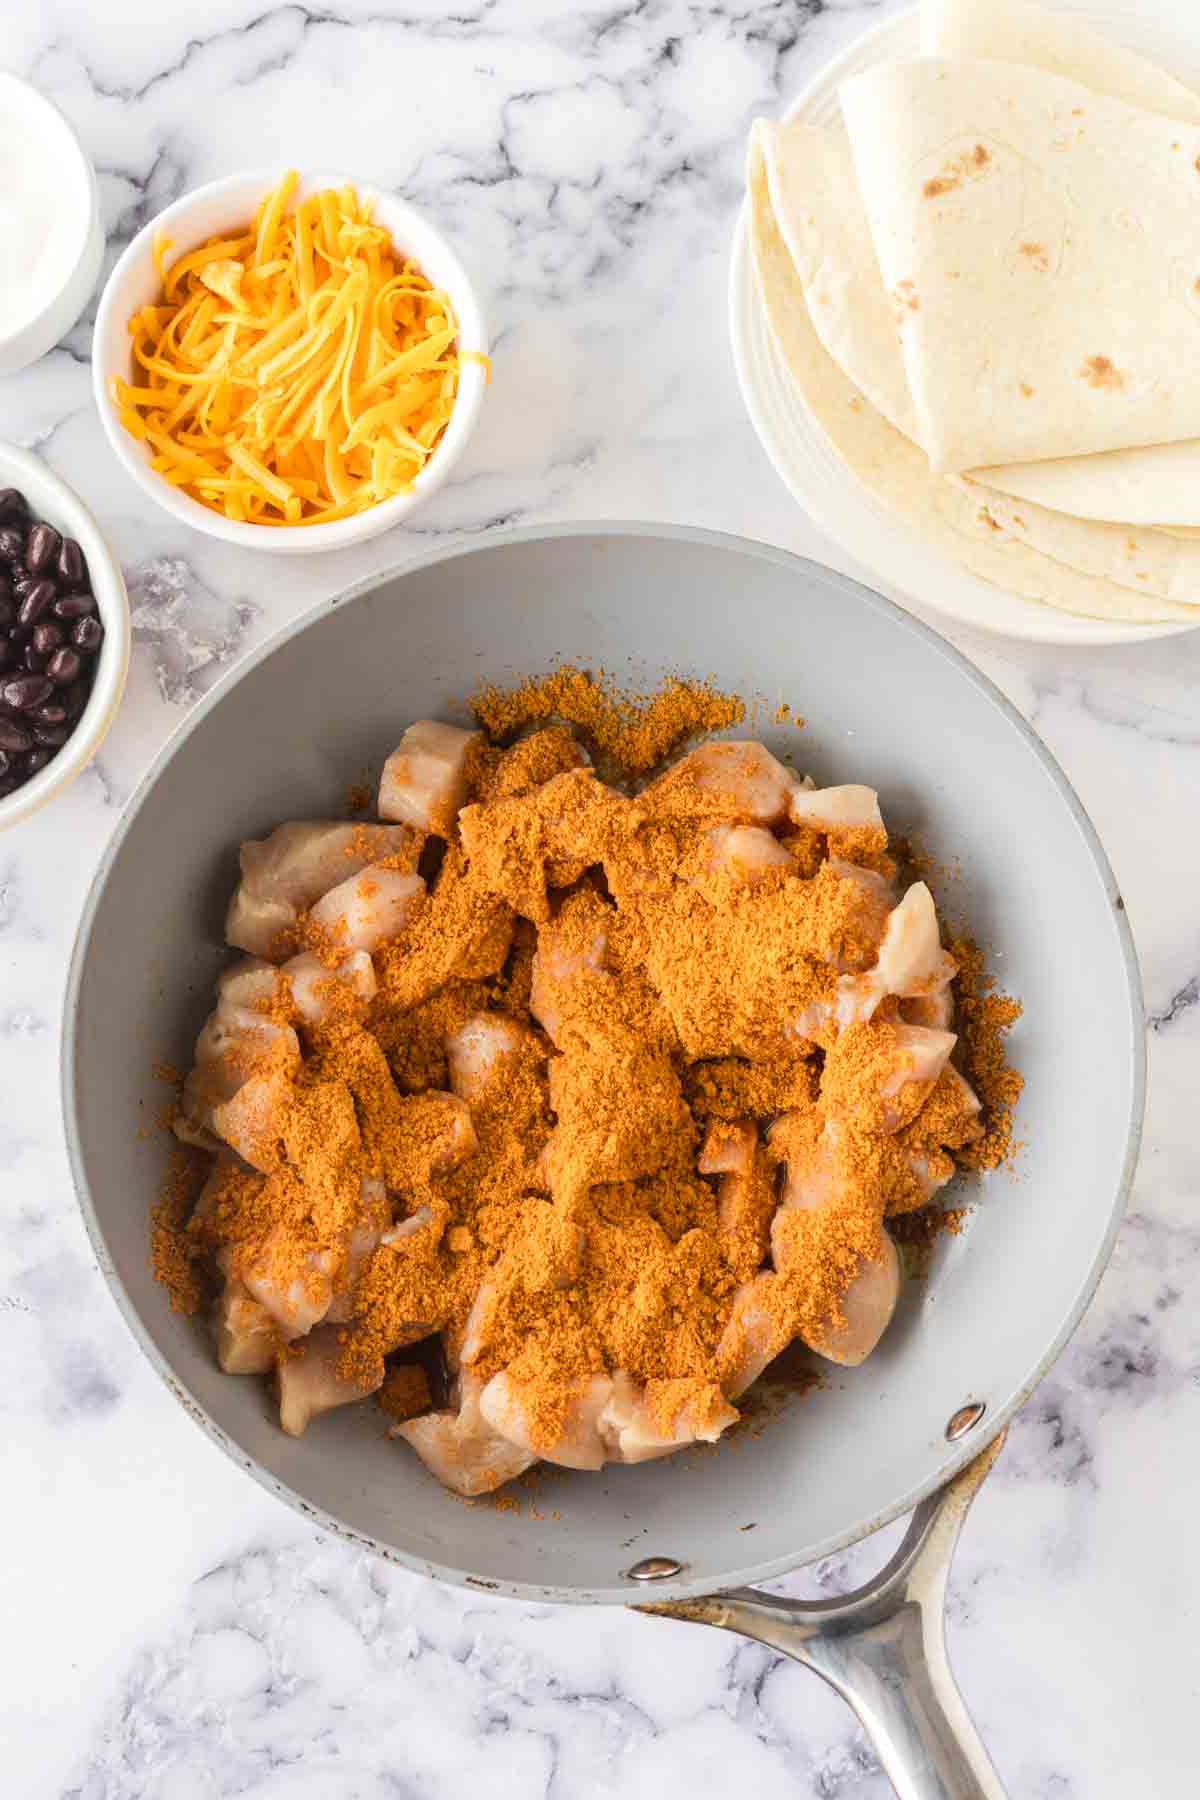 raw chicken and ingredients for chicken burritos